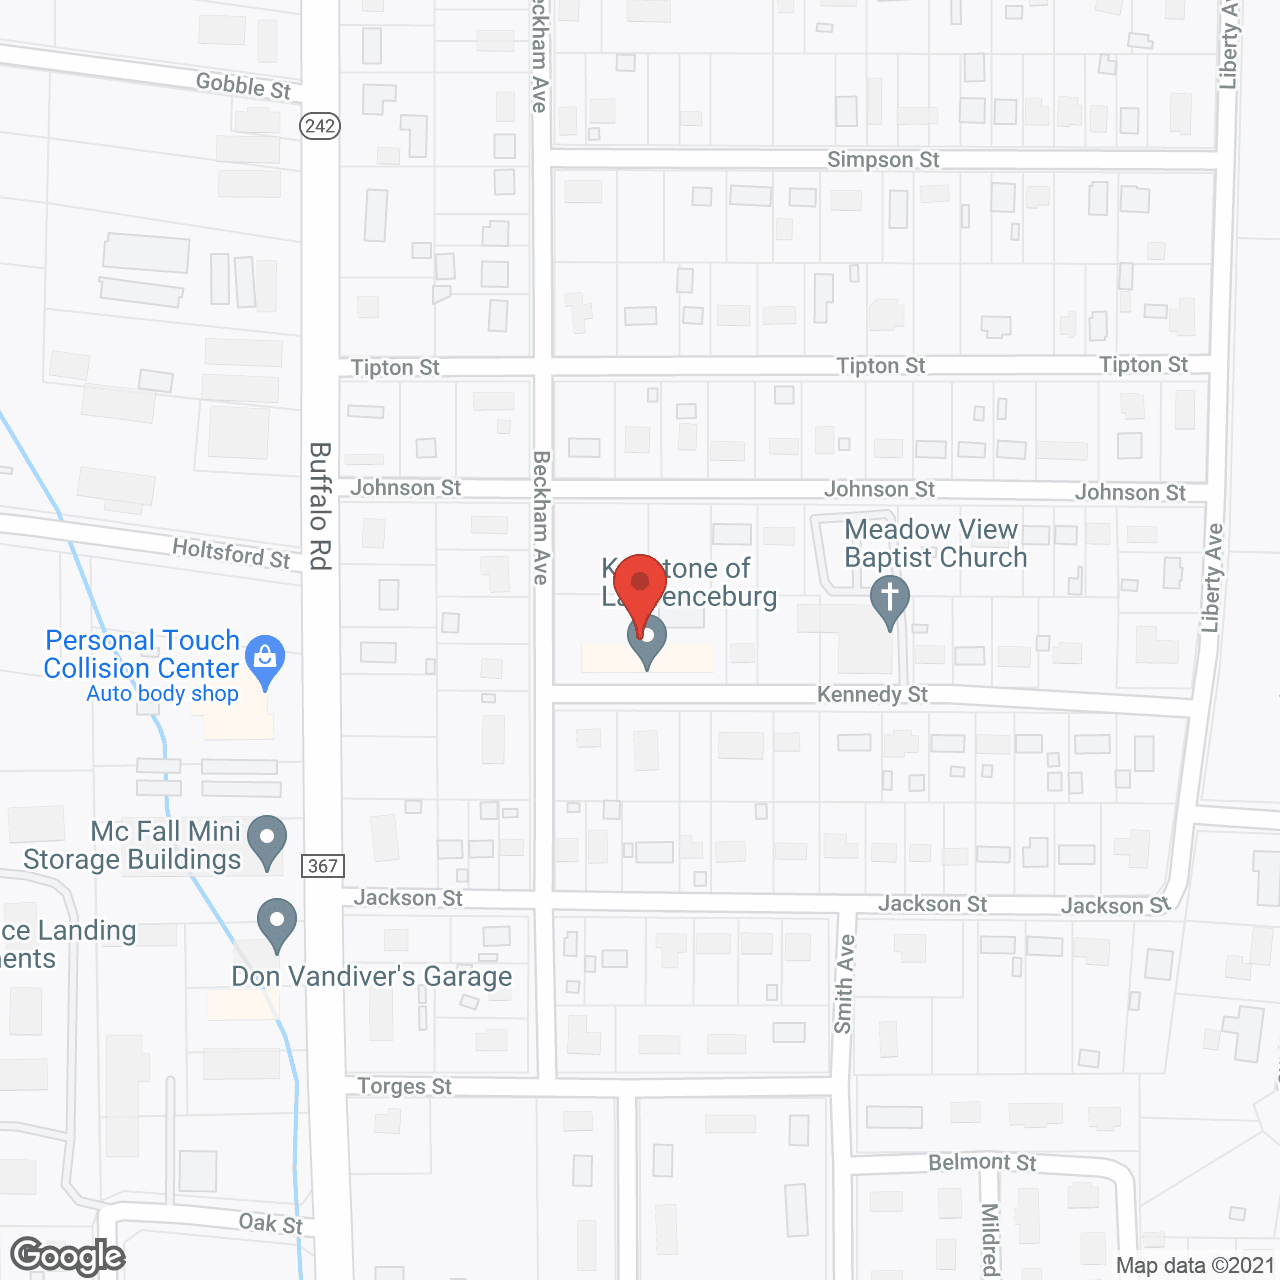 Keestone Senior Community in google map